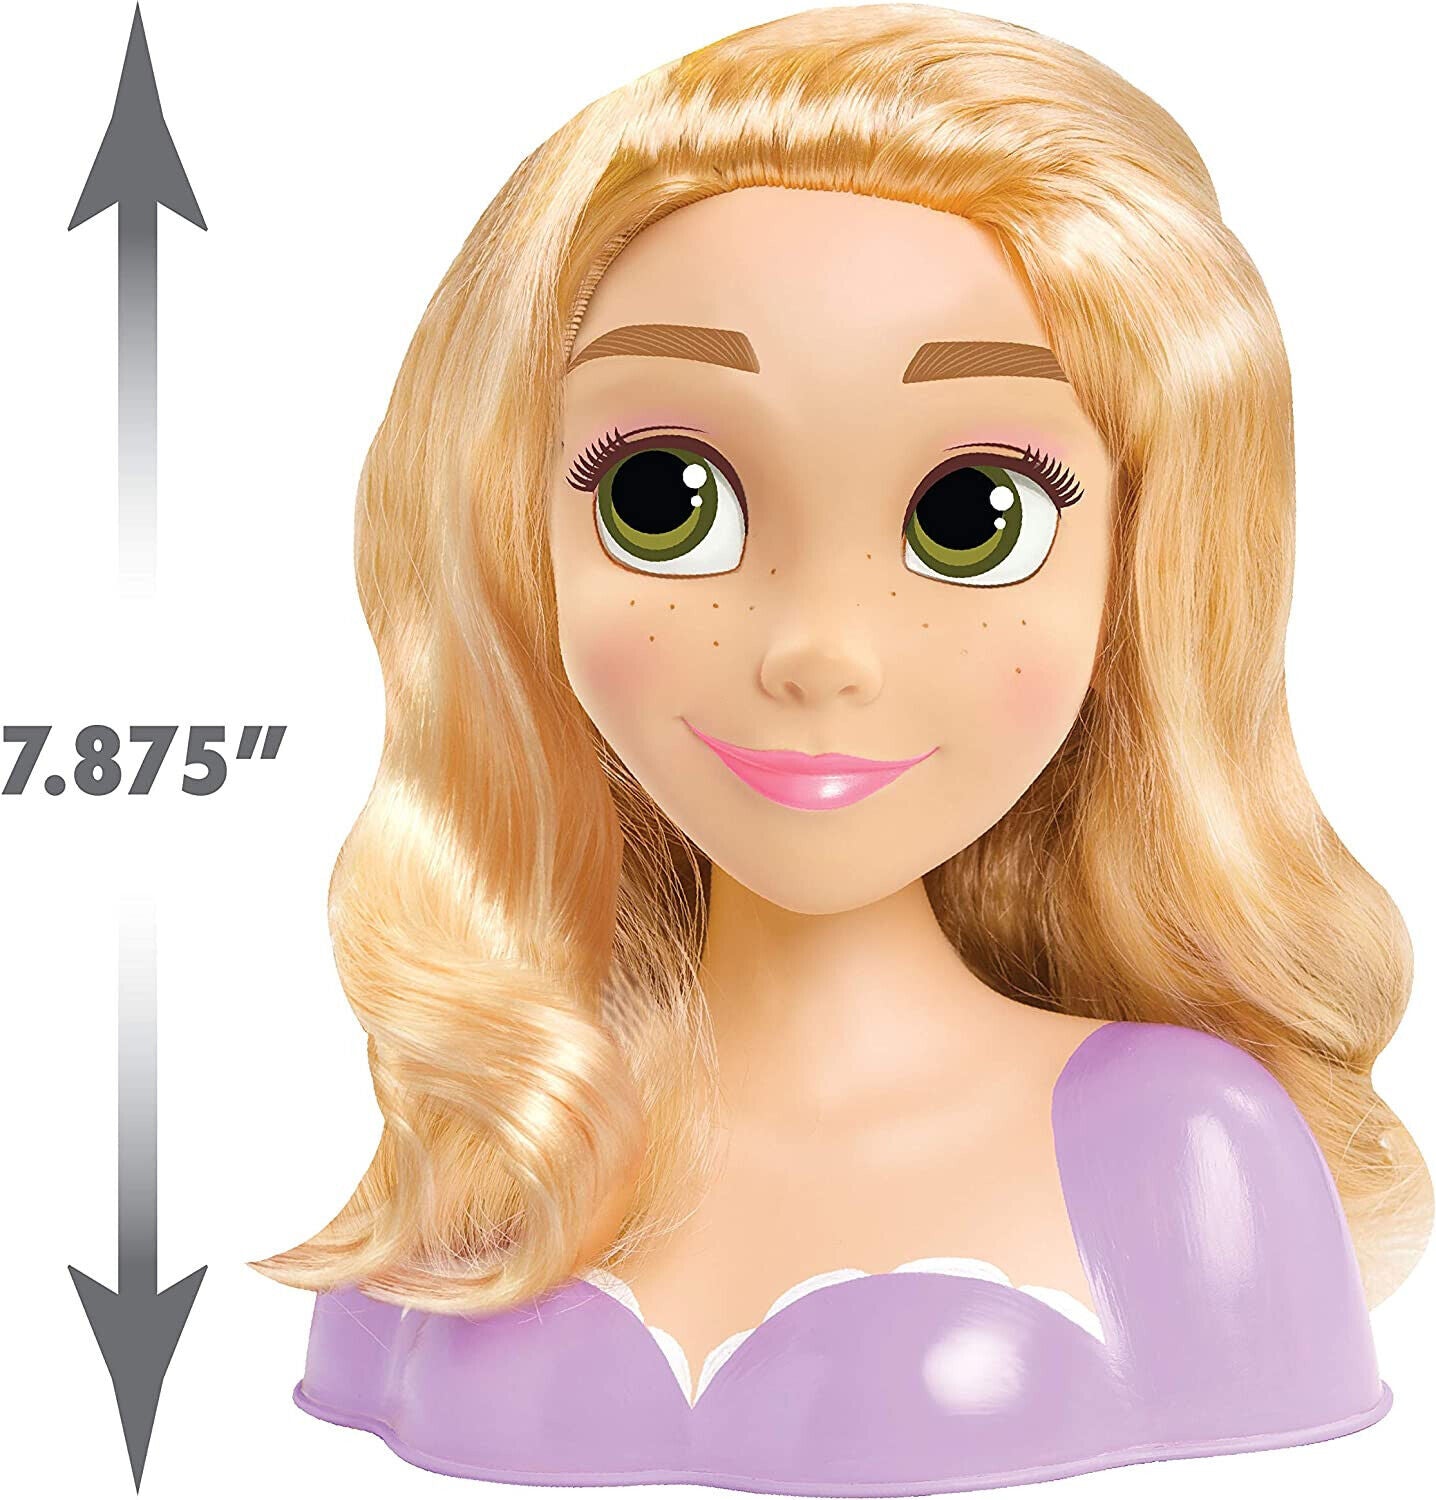 New Disney Princess Rapunzel Styling Head - Perfect for Little Girls!